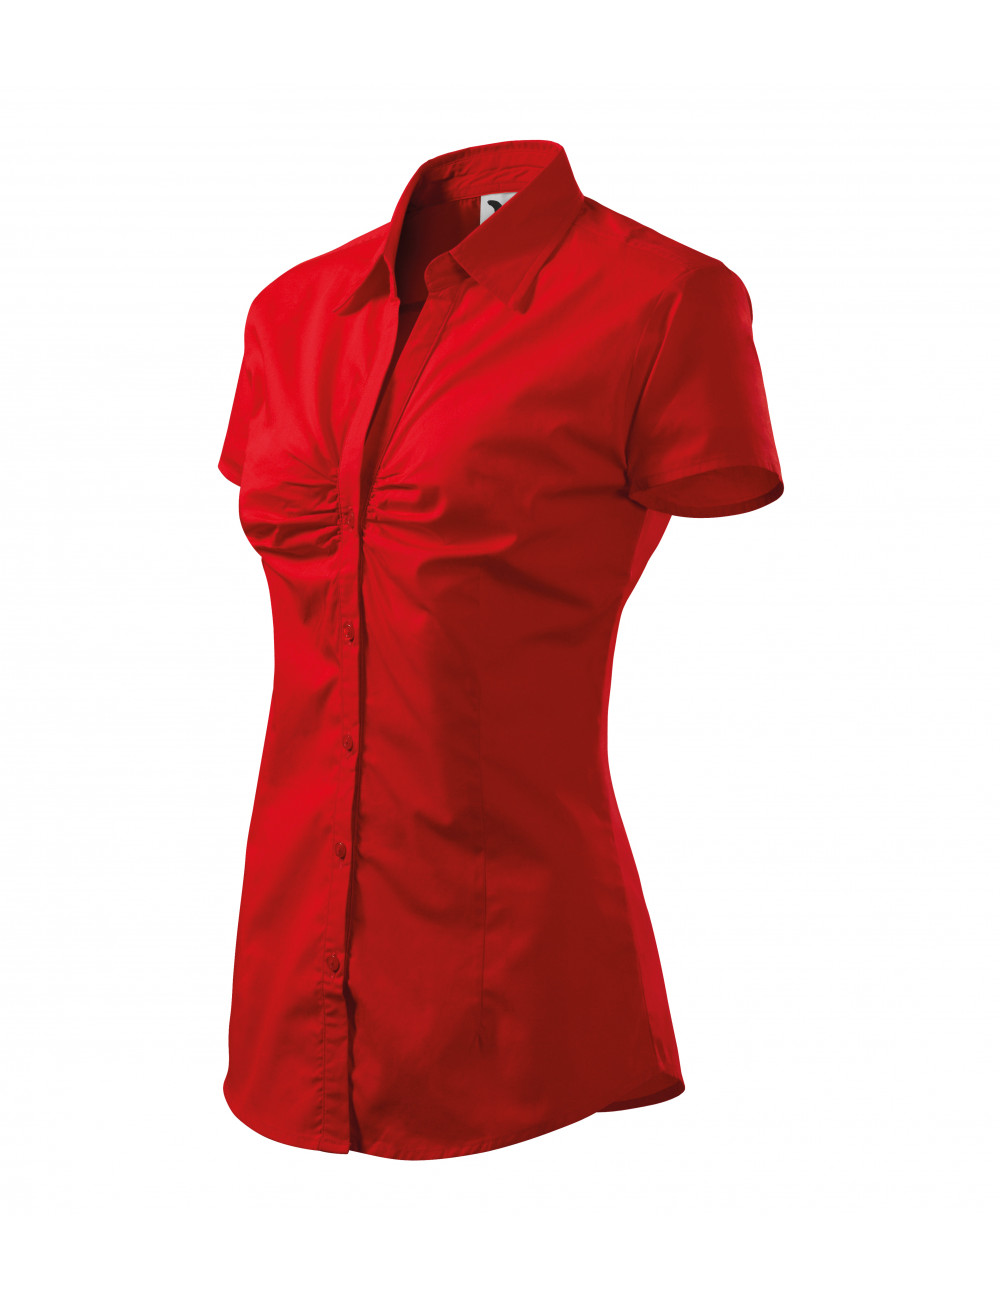 Women`s shirt chic 214 red Adler Malfini